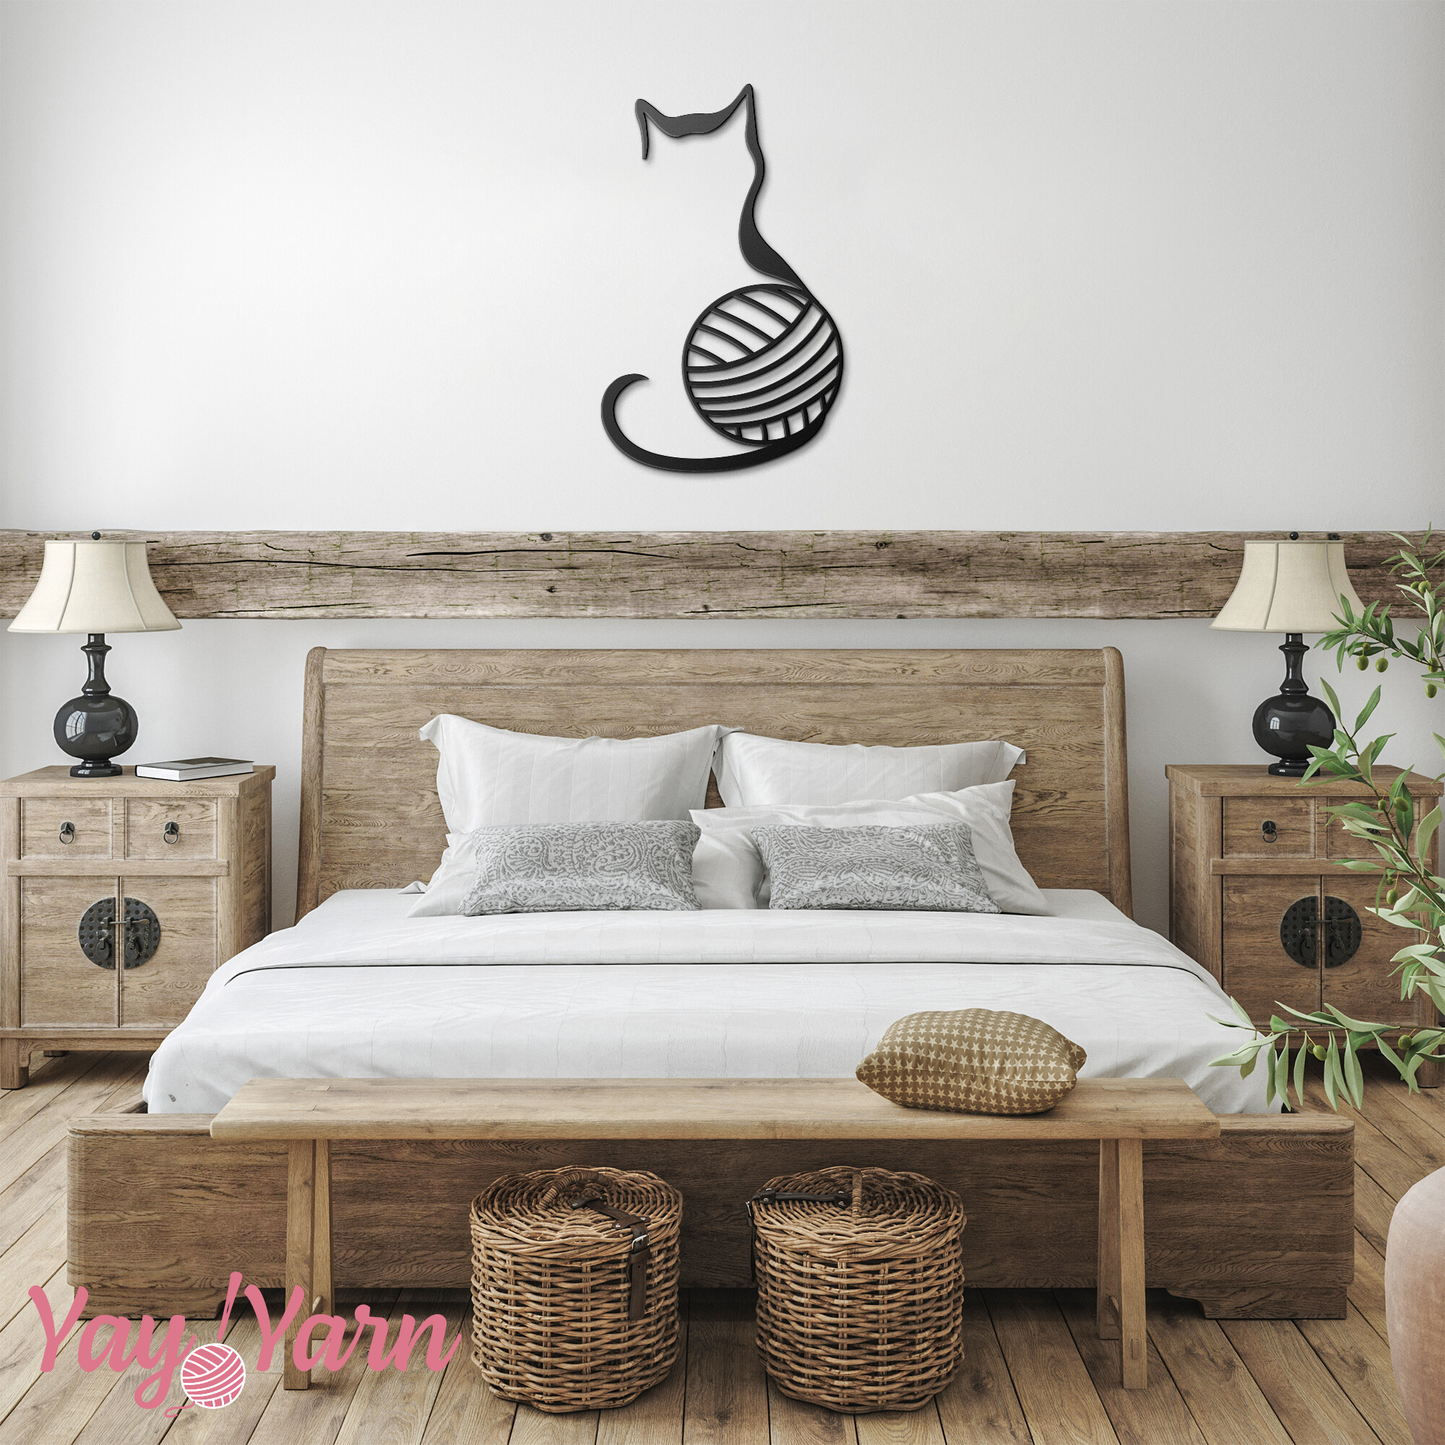 Yarn Cat Metal Wall Art Black on White Wall in Boho Bedroom